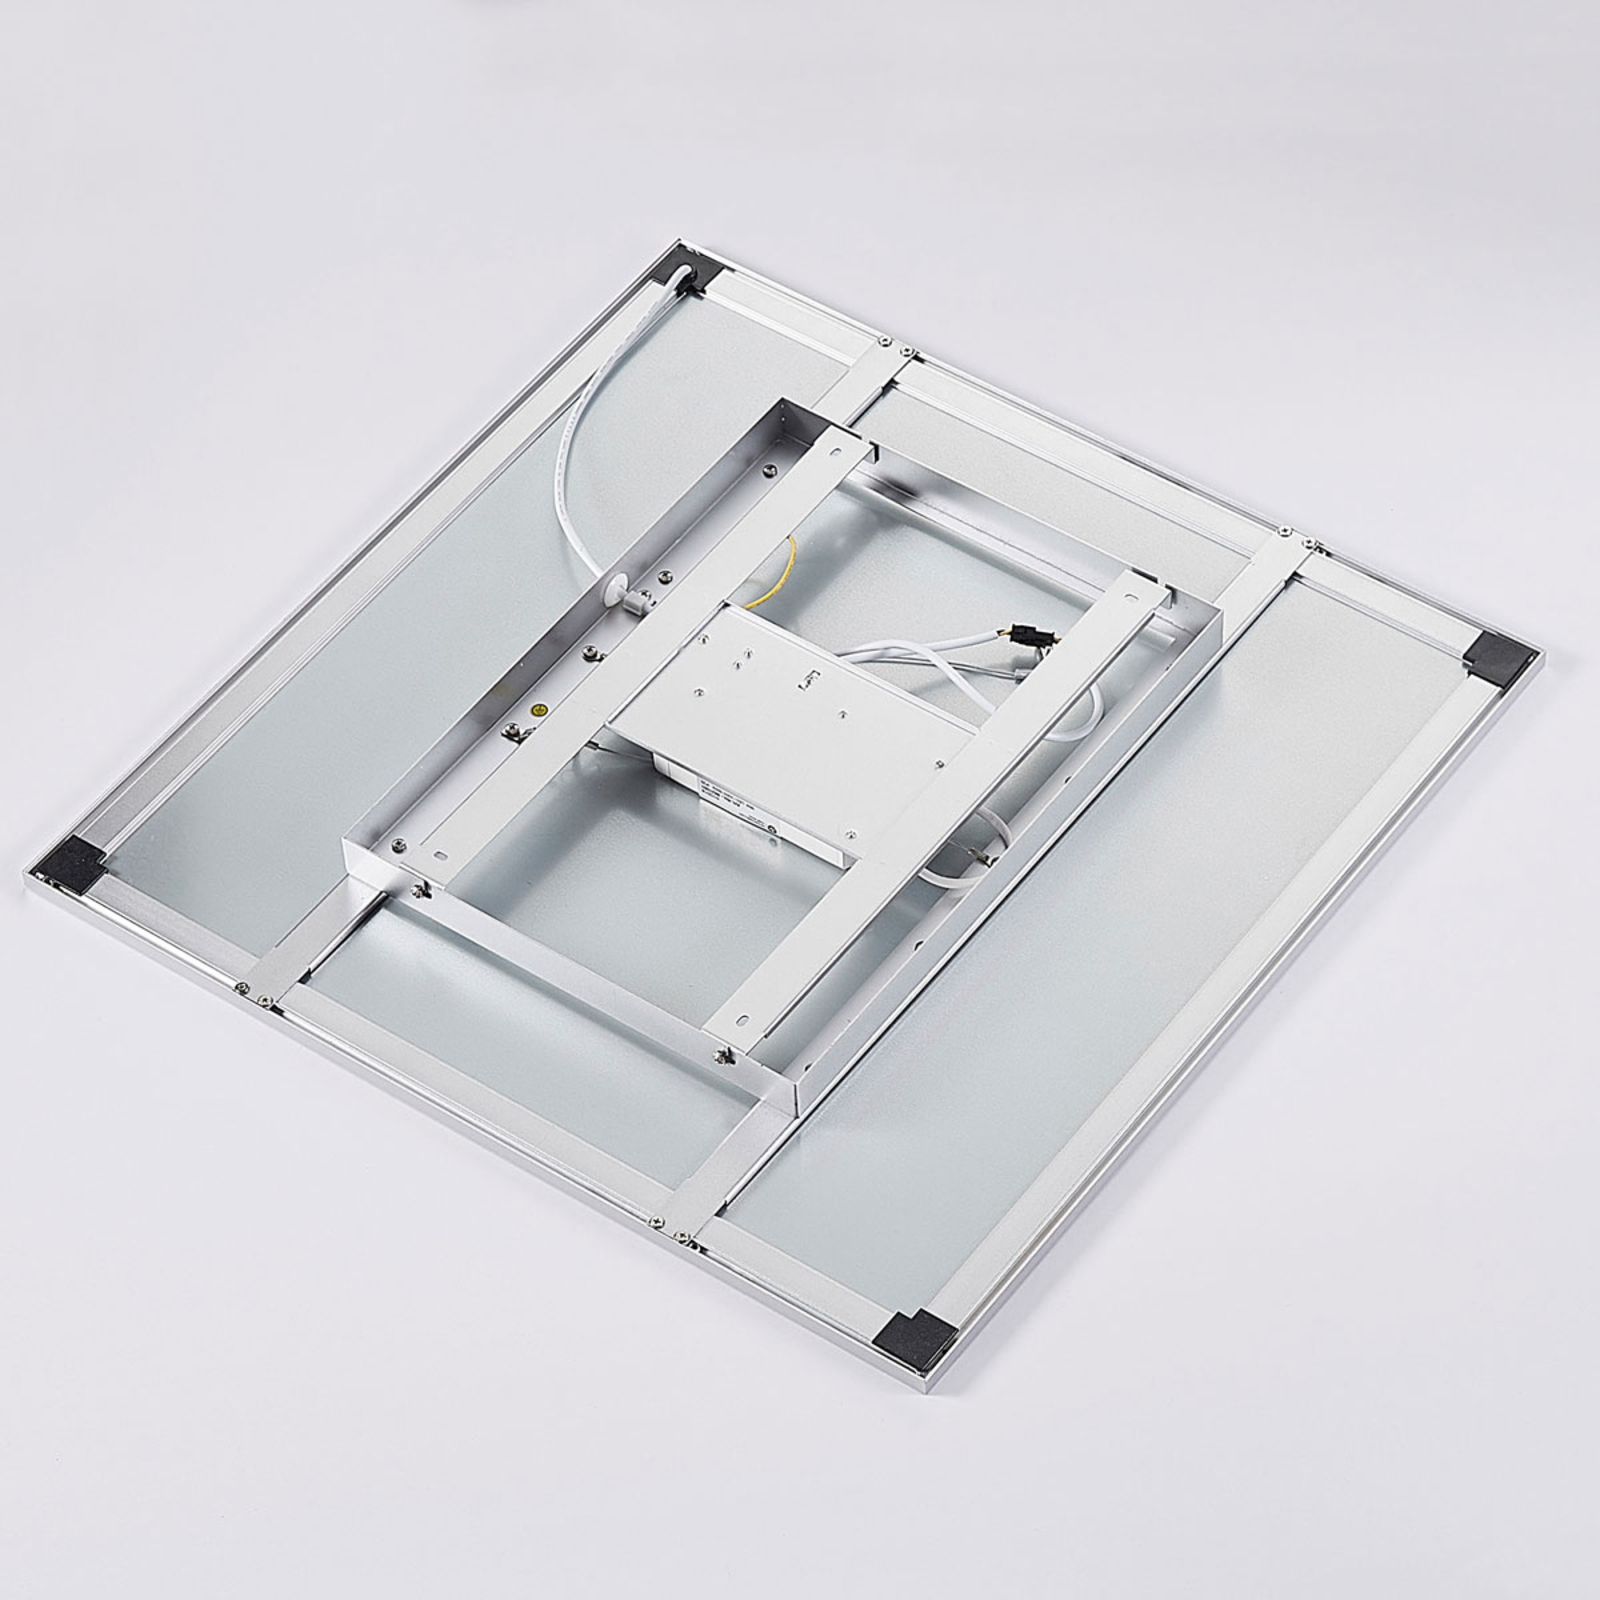 Arcchio Lysander LED-Panel, CCT, 62 cm, weiß